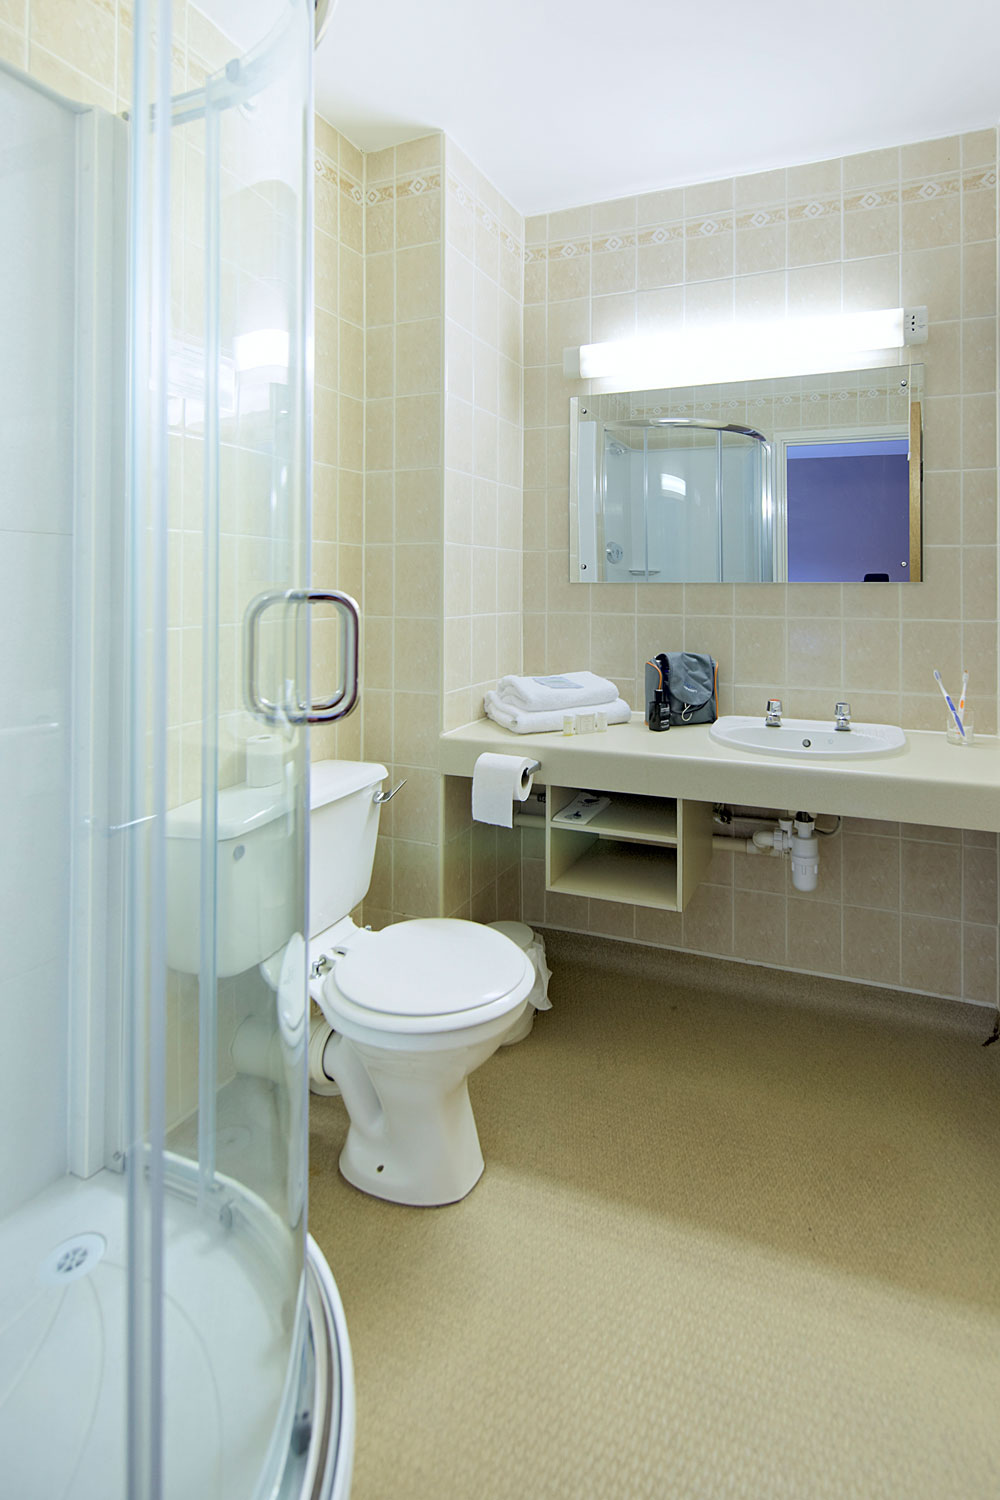 Keele University, accommodation en-suite shower room